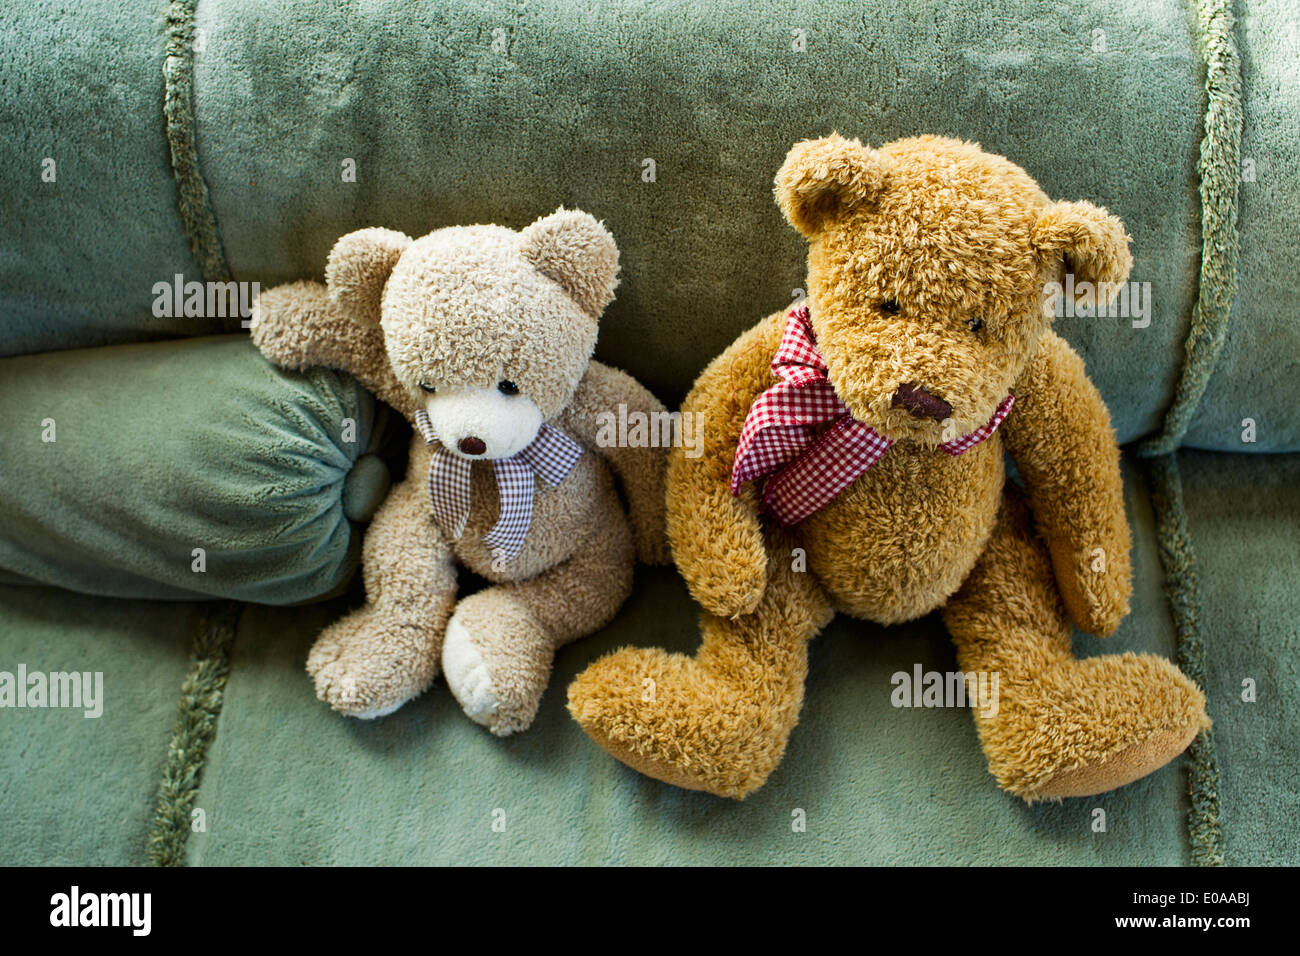 Two teddy bears sitting on sofa Stock Photo